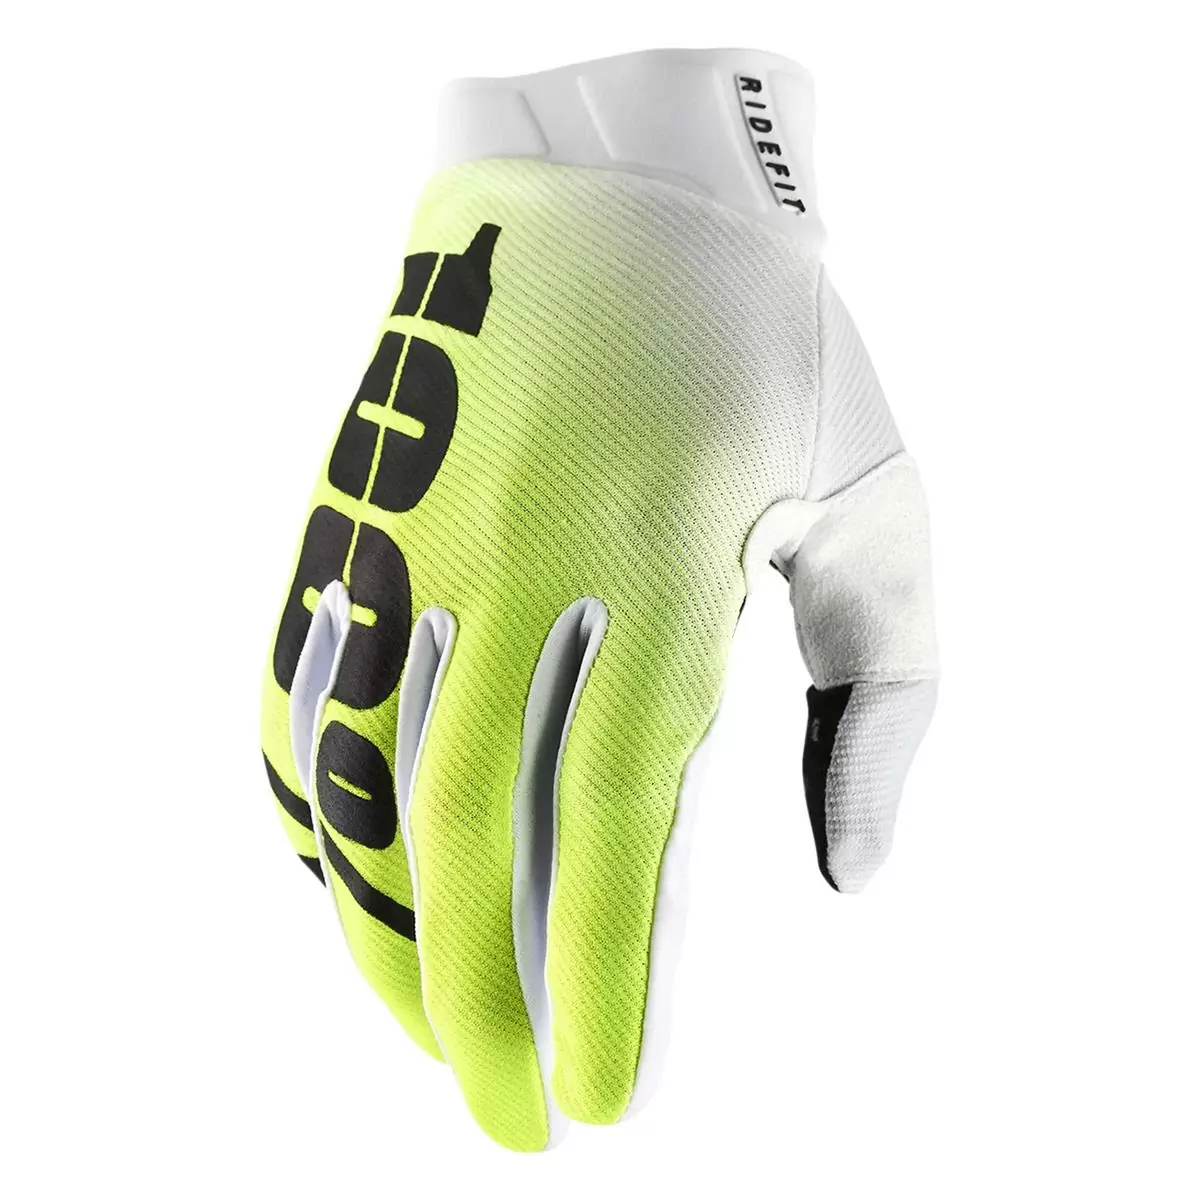 Ridefit Korp Gloves Yellow Size M - image